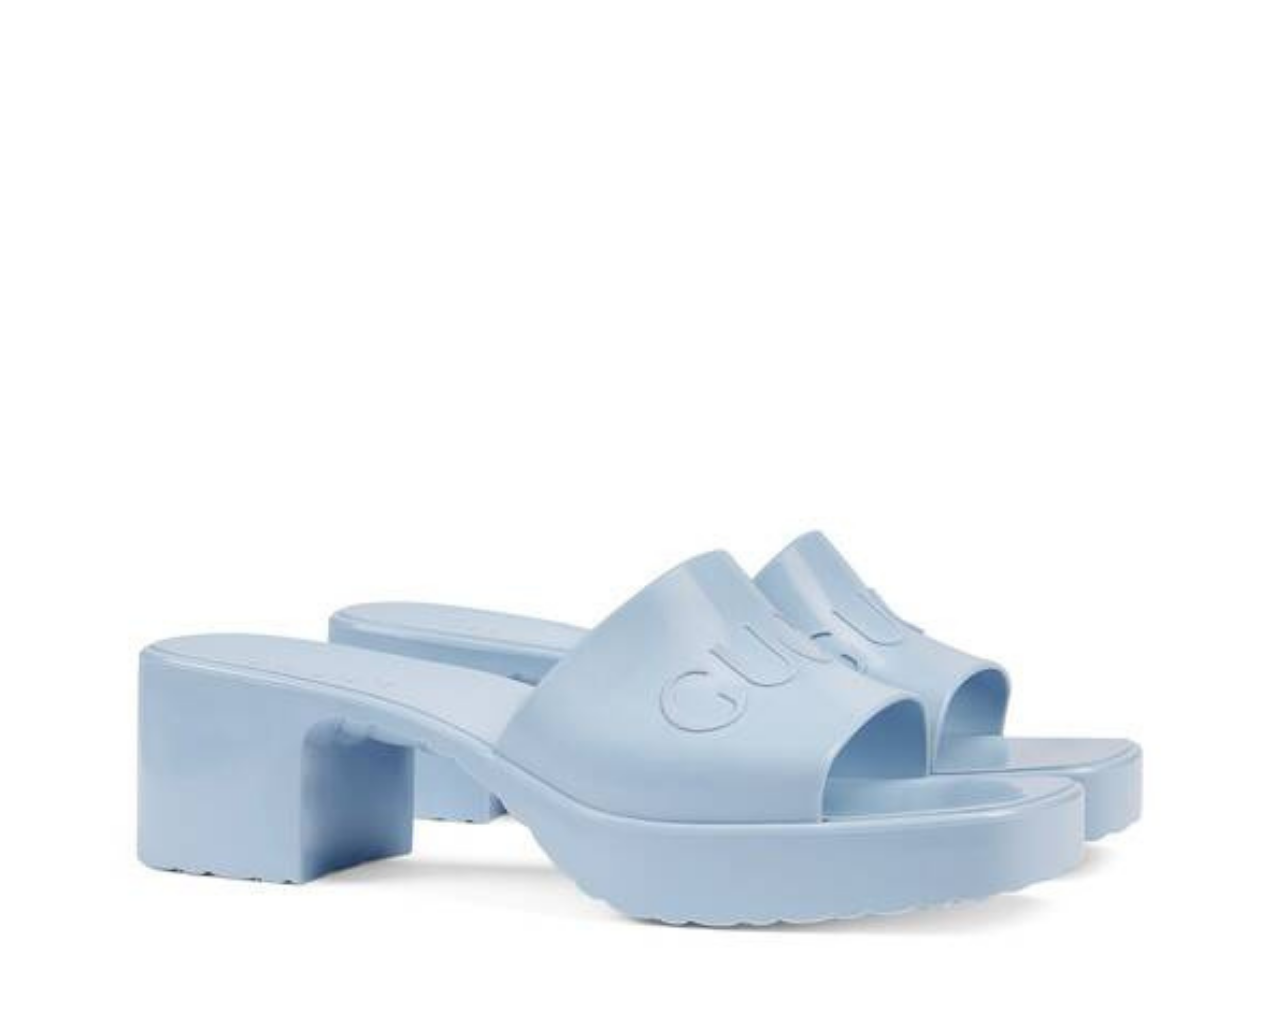 Jelly Sandals Trend for Summer 2021: Shop GRAZIA's Picks